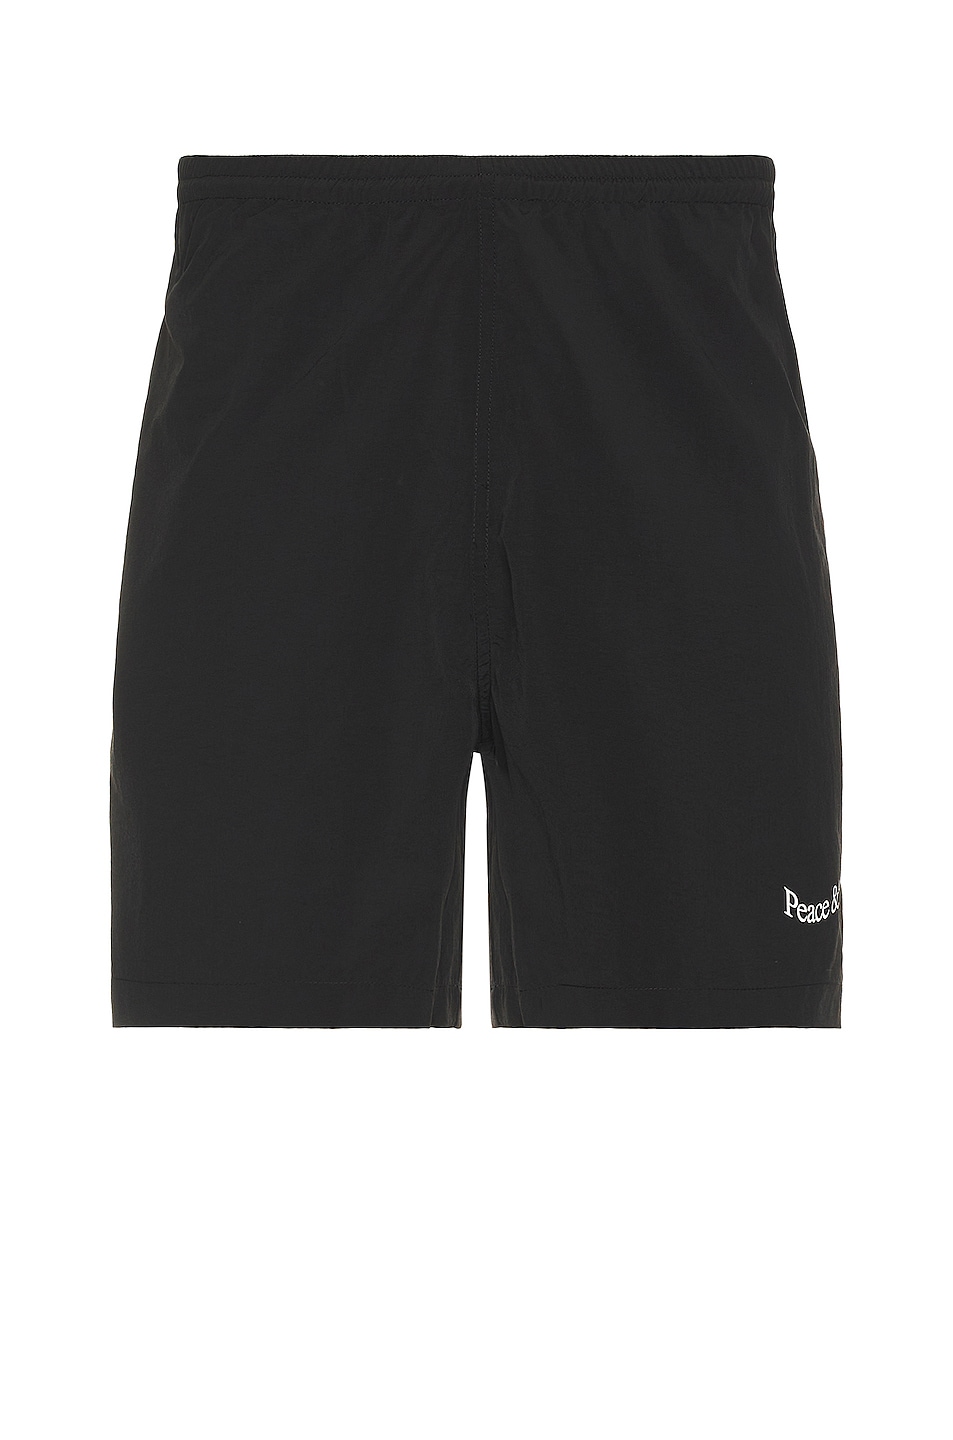 Workmark 5 Shorts in Black